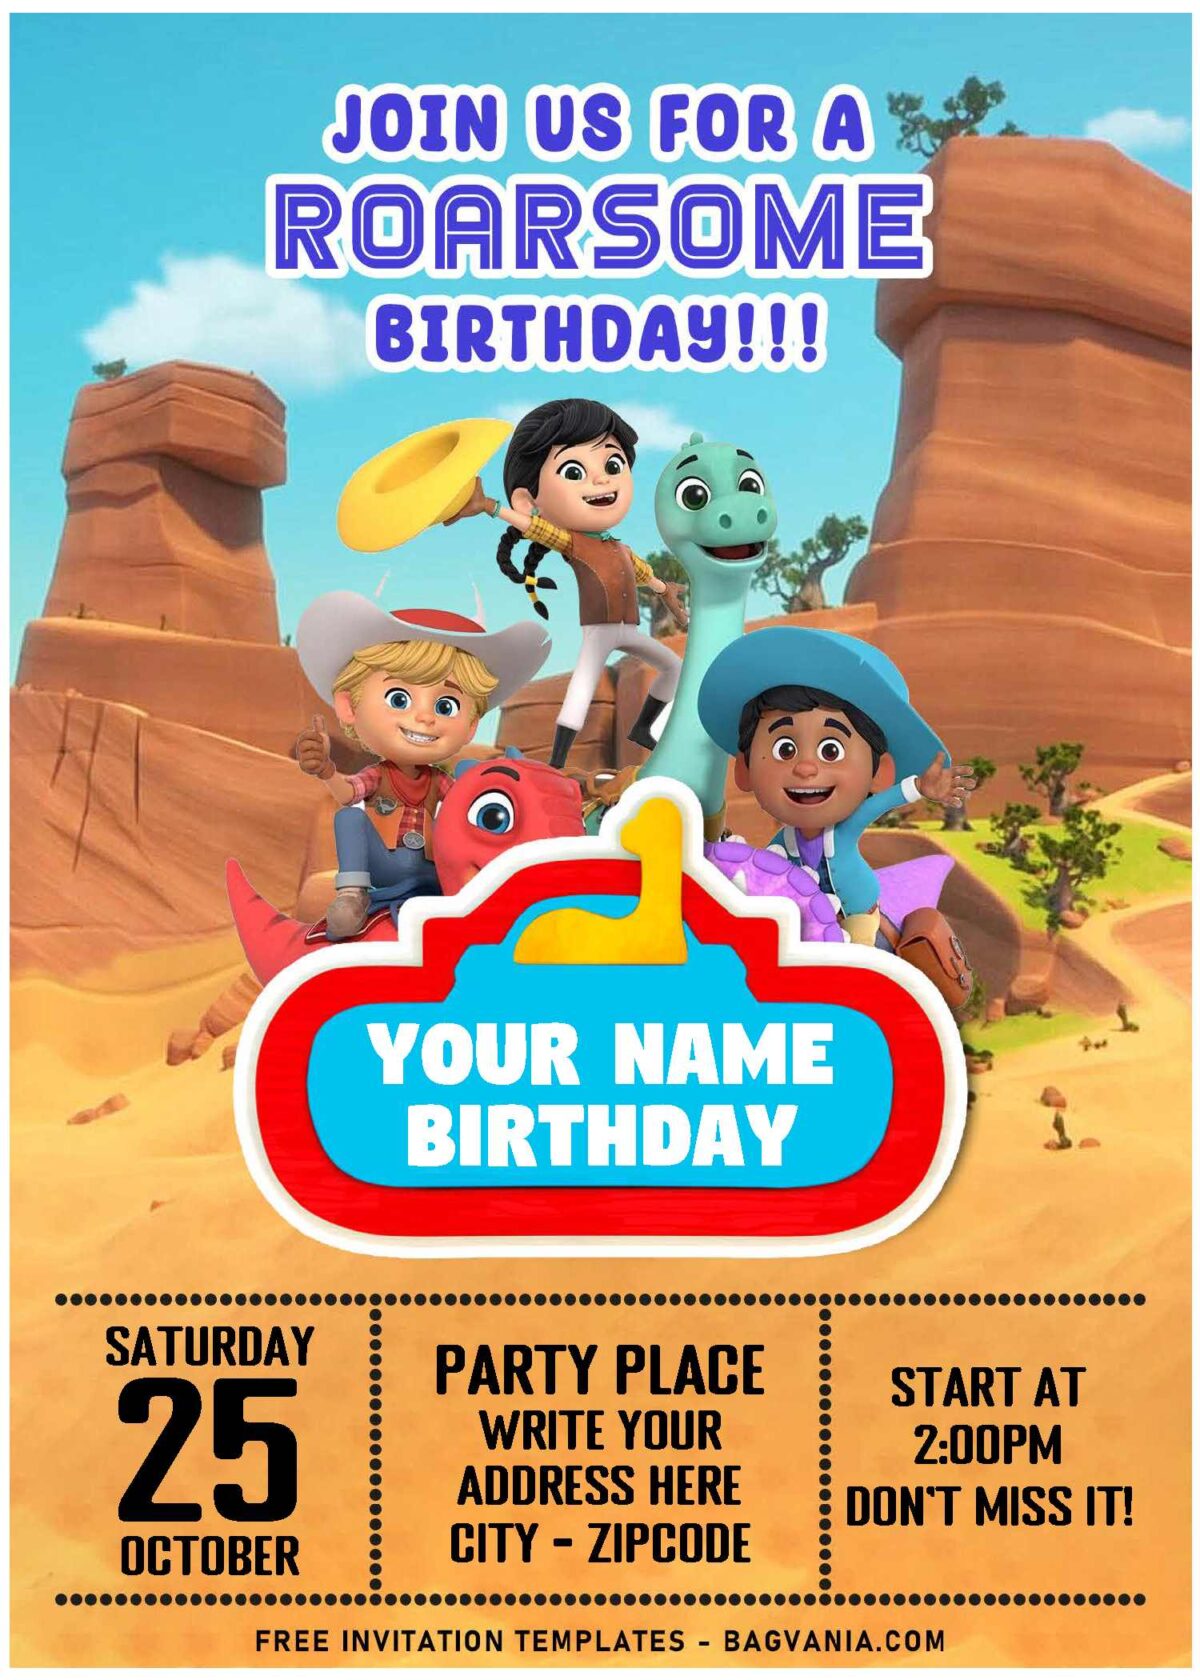 (Free Editable PDF) Meet The Rancher Dino Ranch Themed Birthday Invitation Templates with editable text